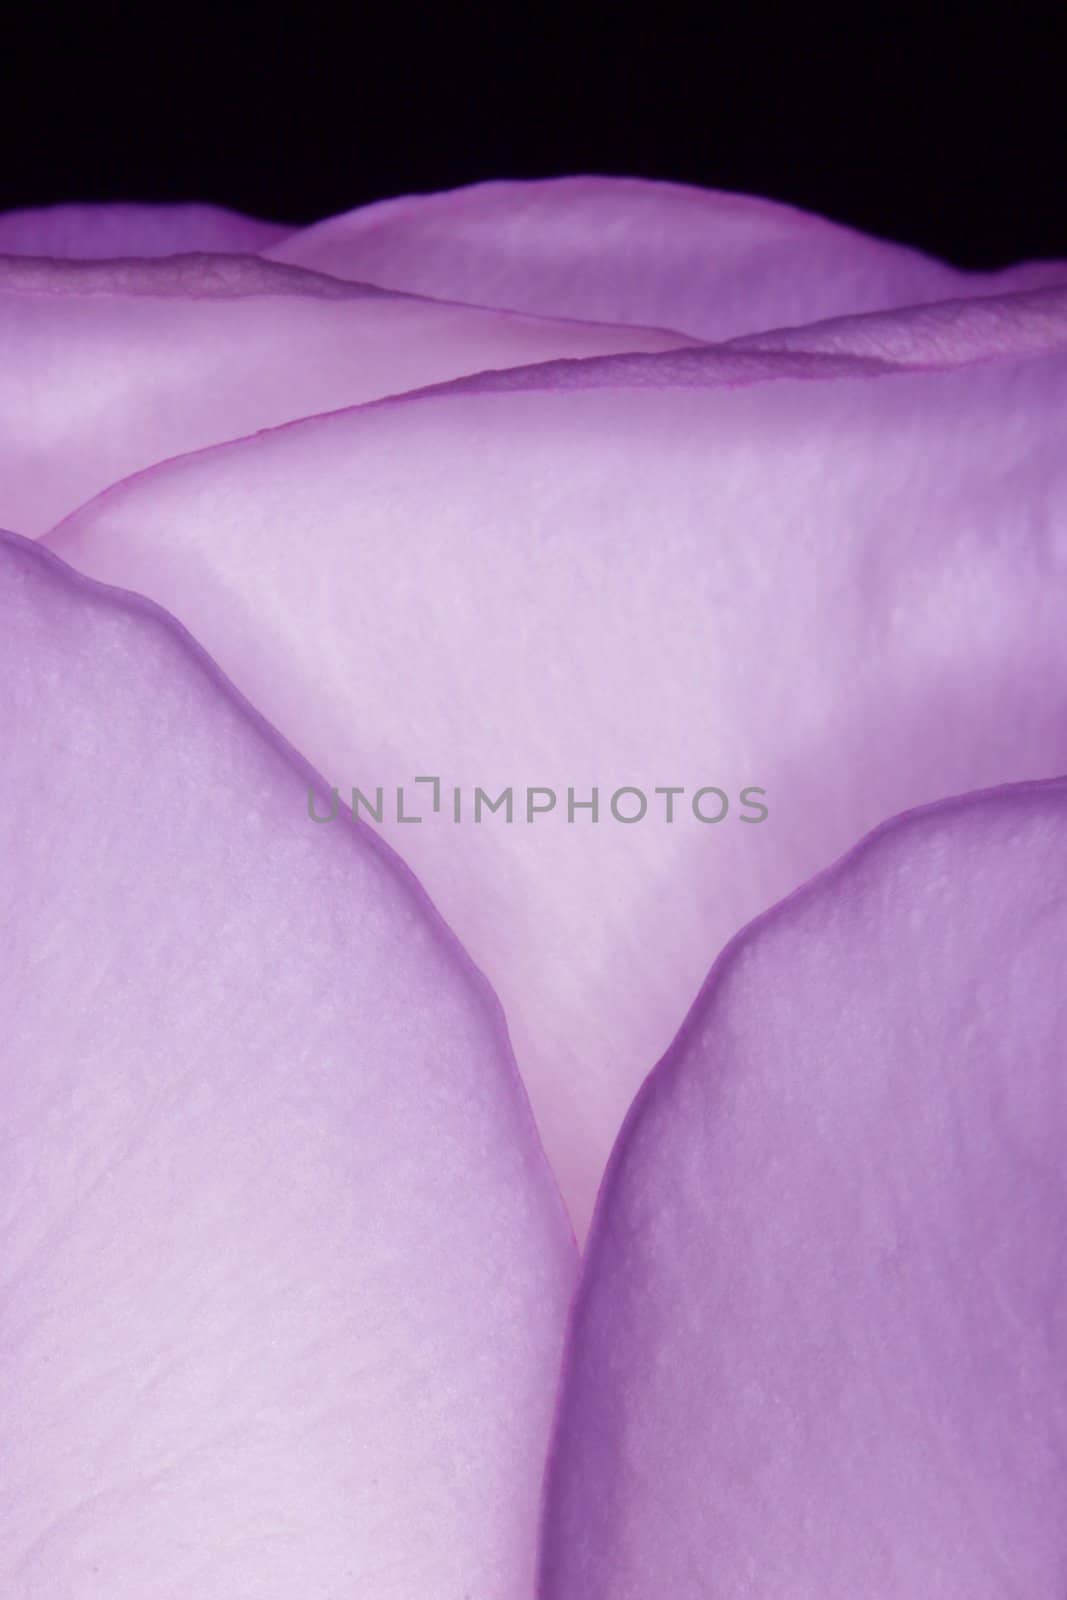 Beautiful purple rose - close up